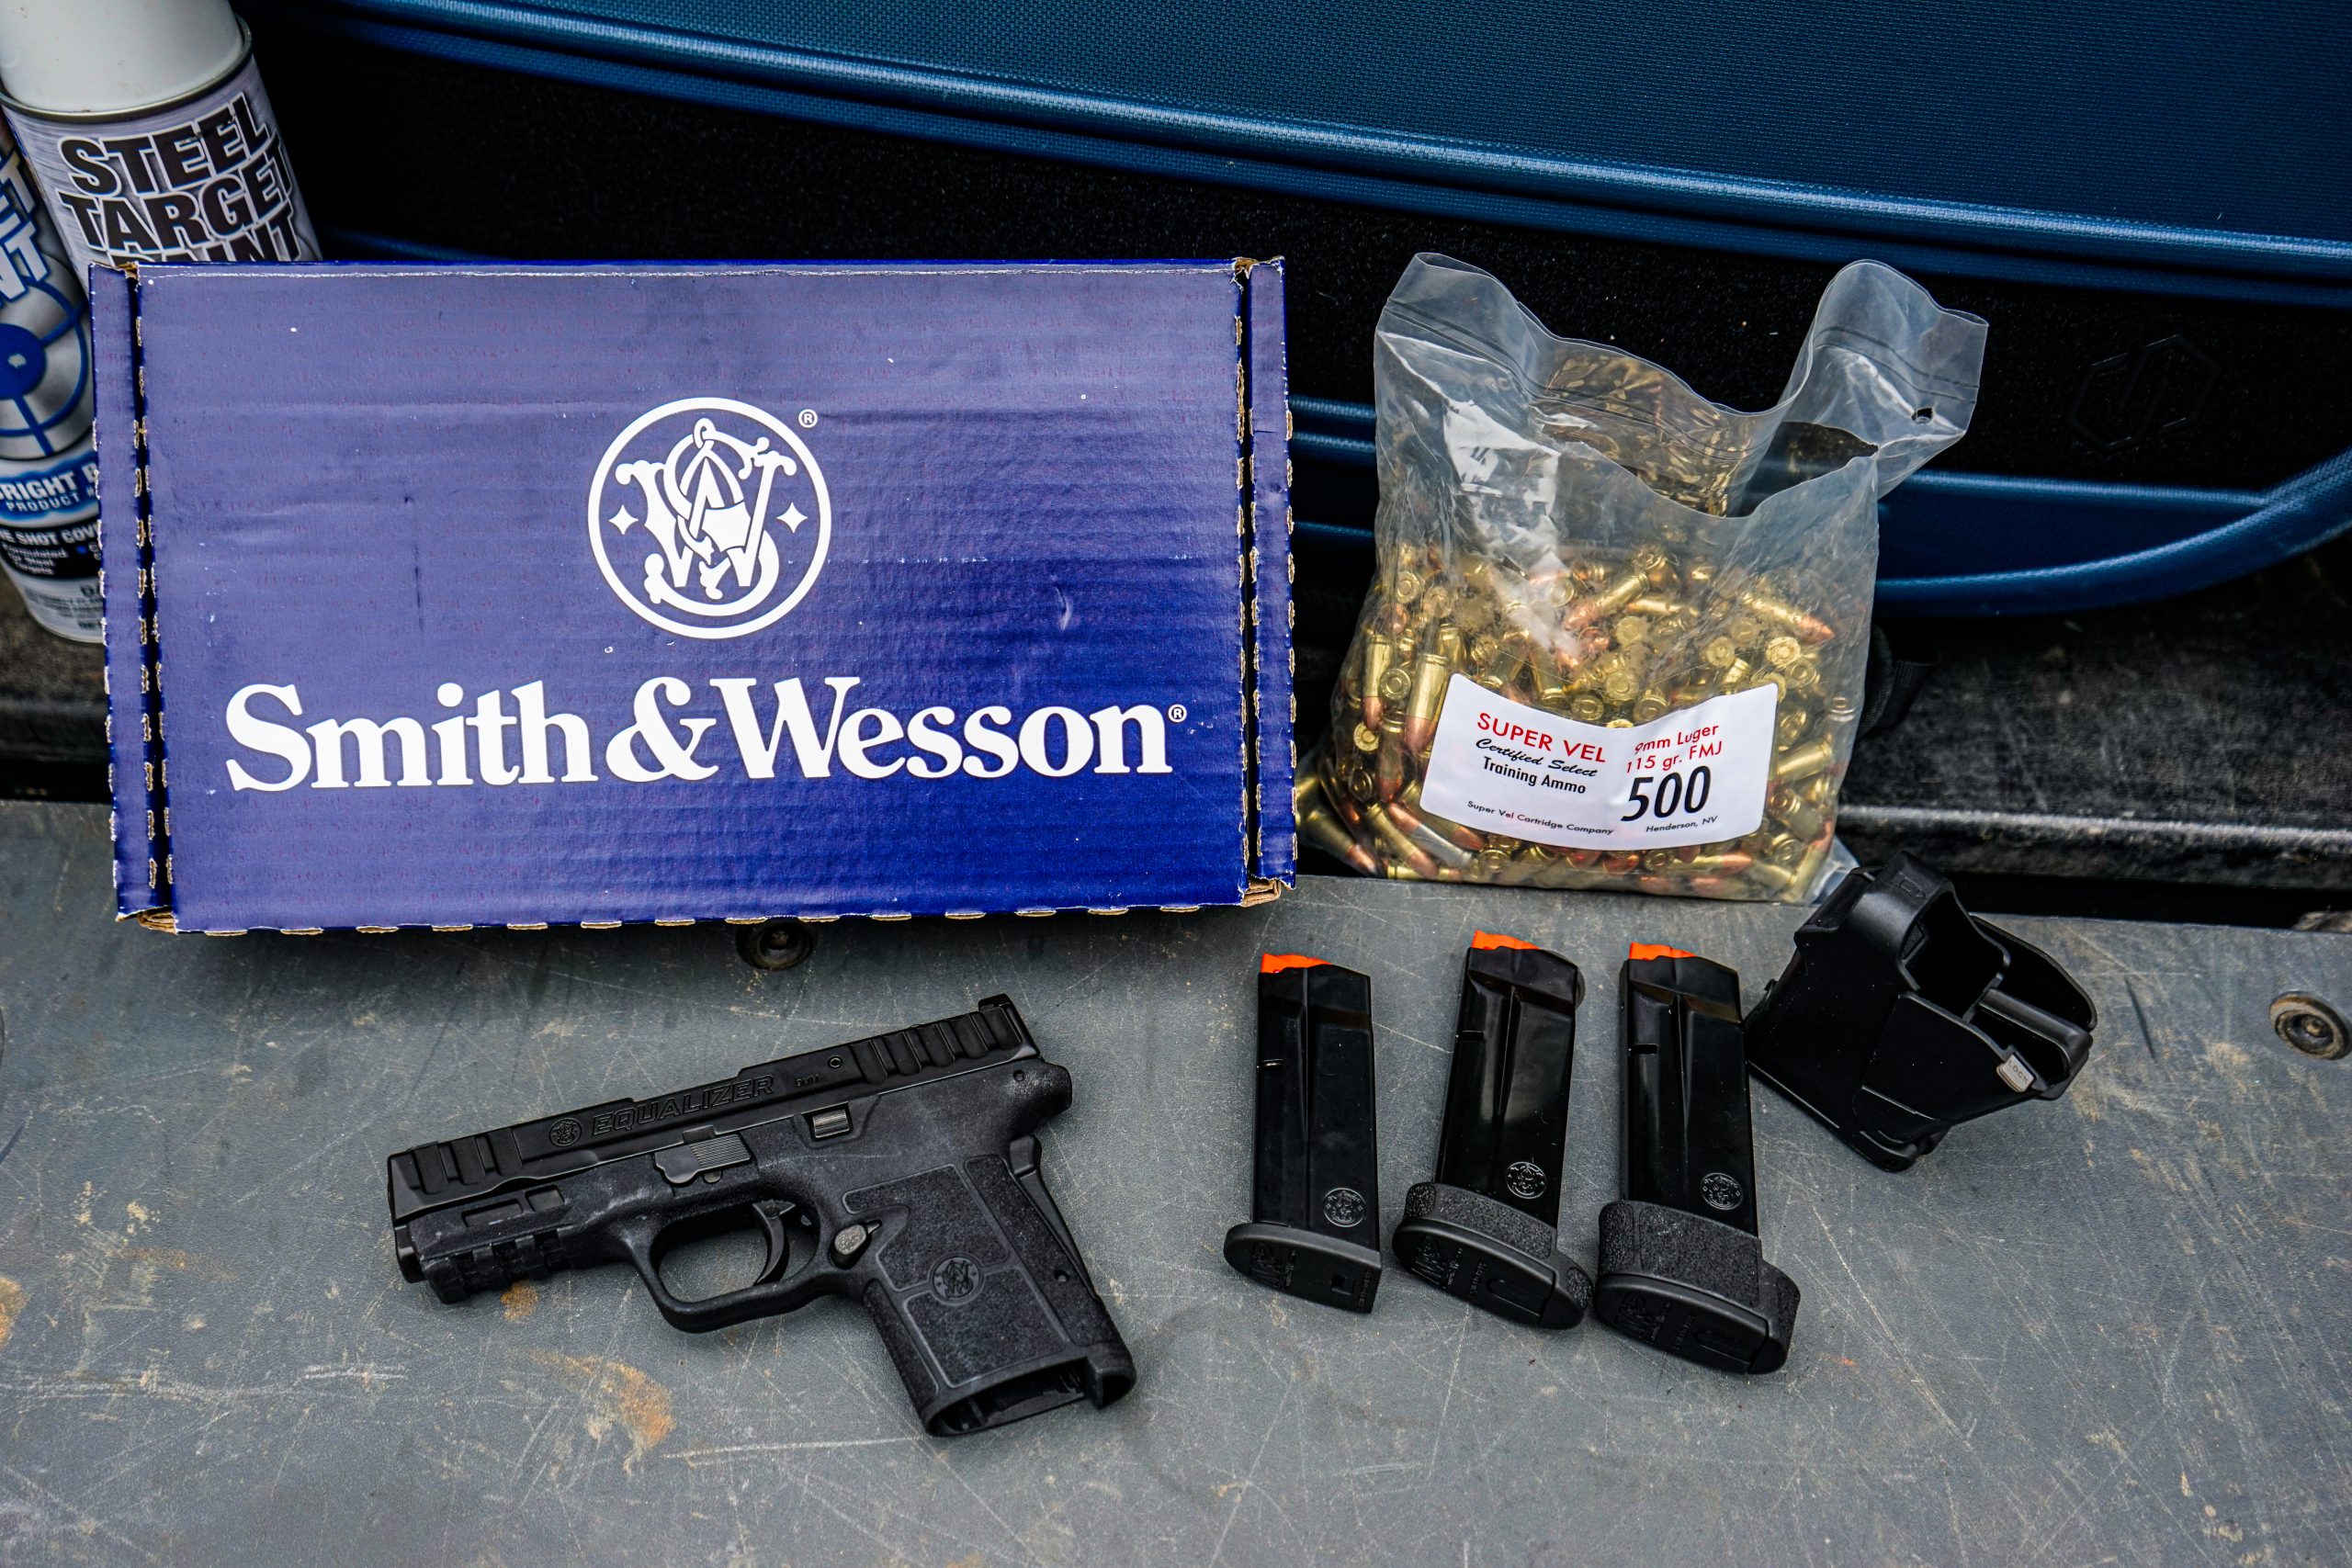 Smith & Wesson Equalizer box